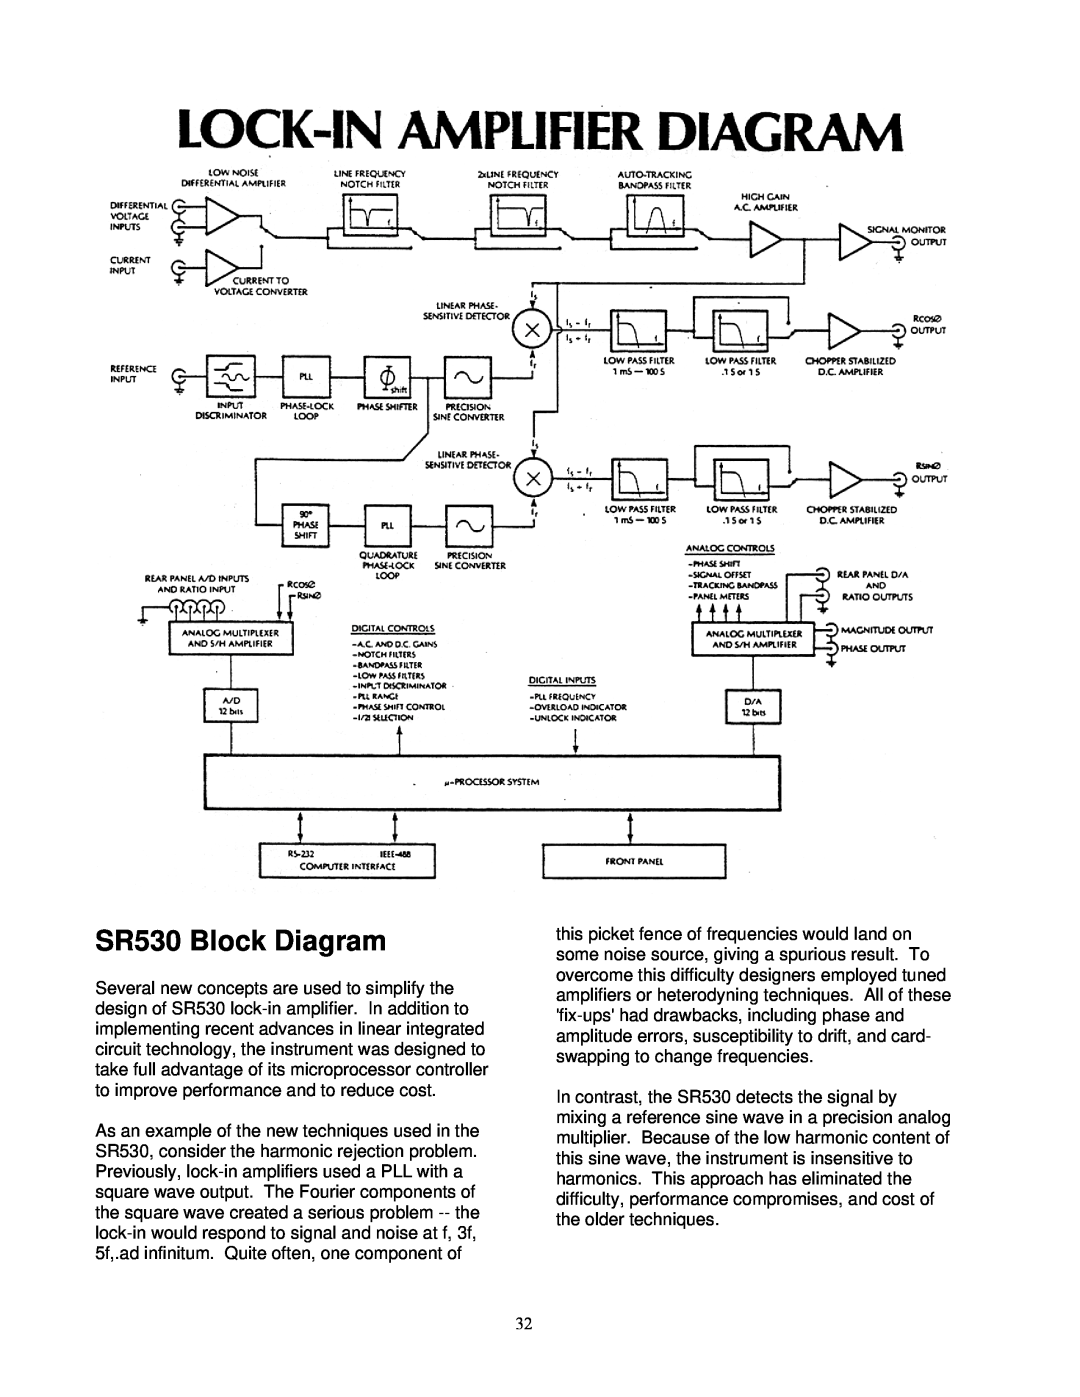 SRS Labs Lock-In Amplifier manual SR530 Block Diagram 